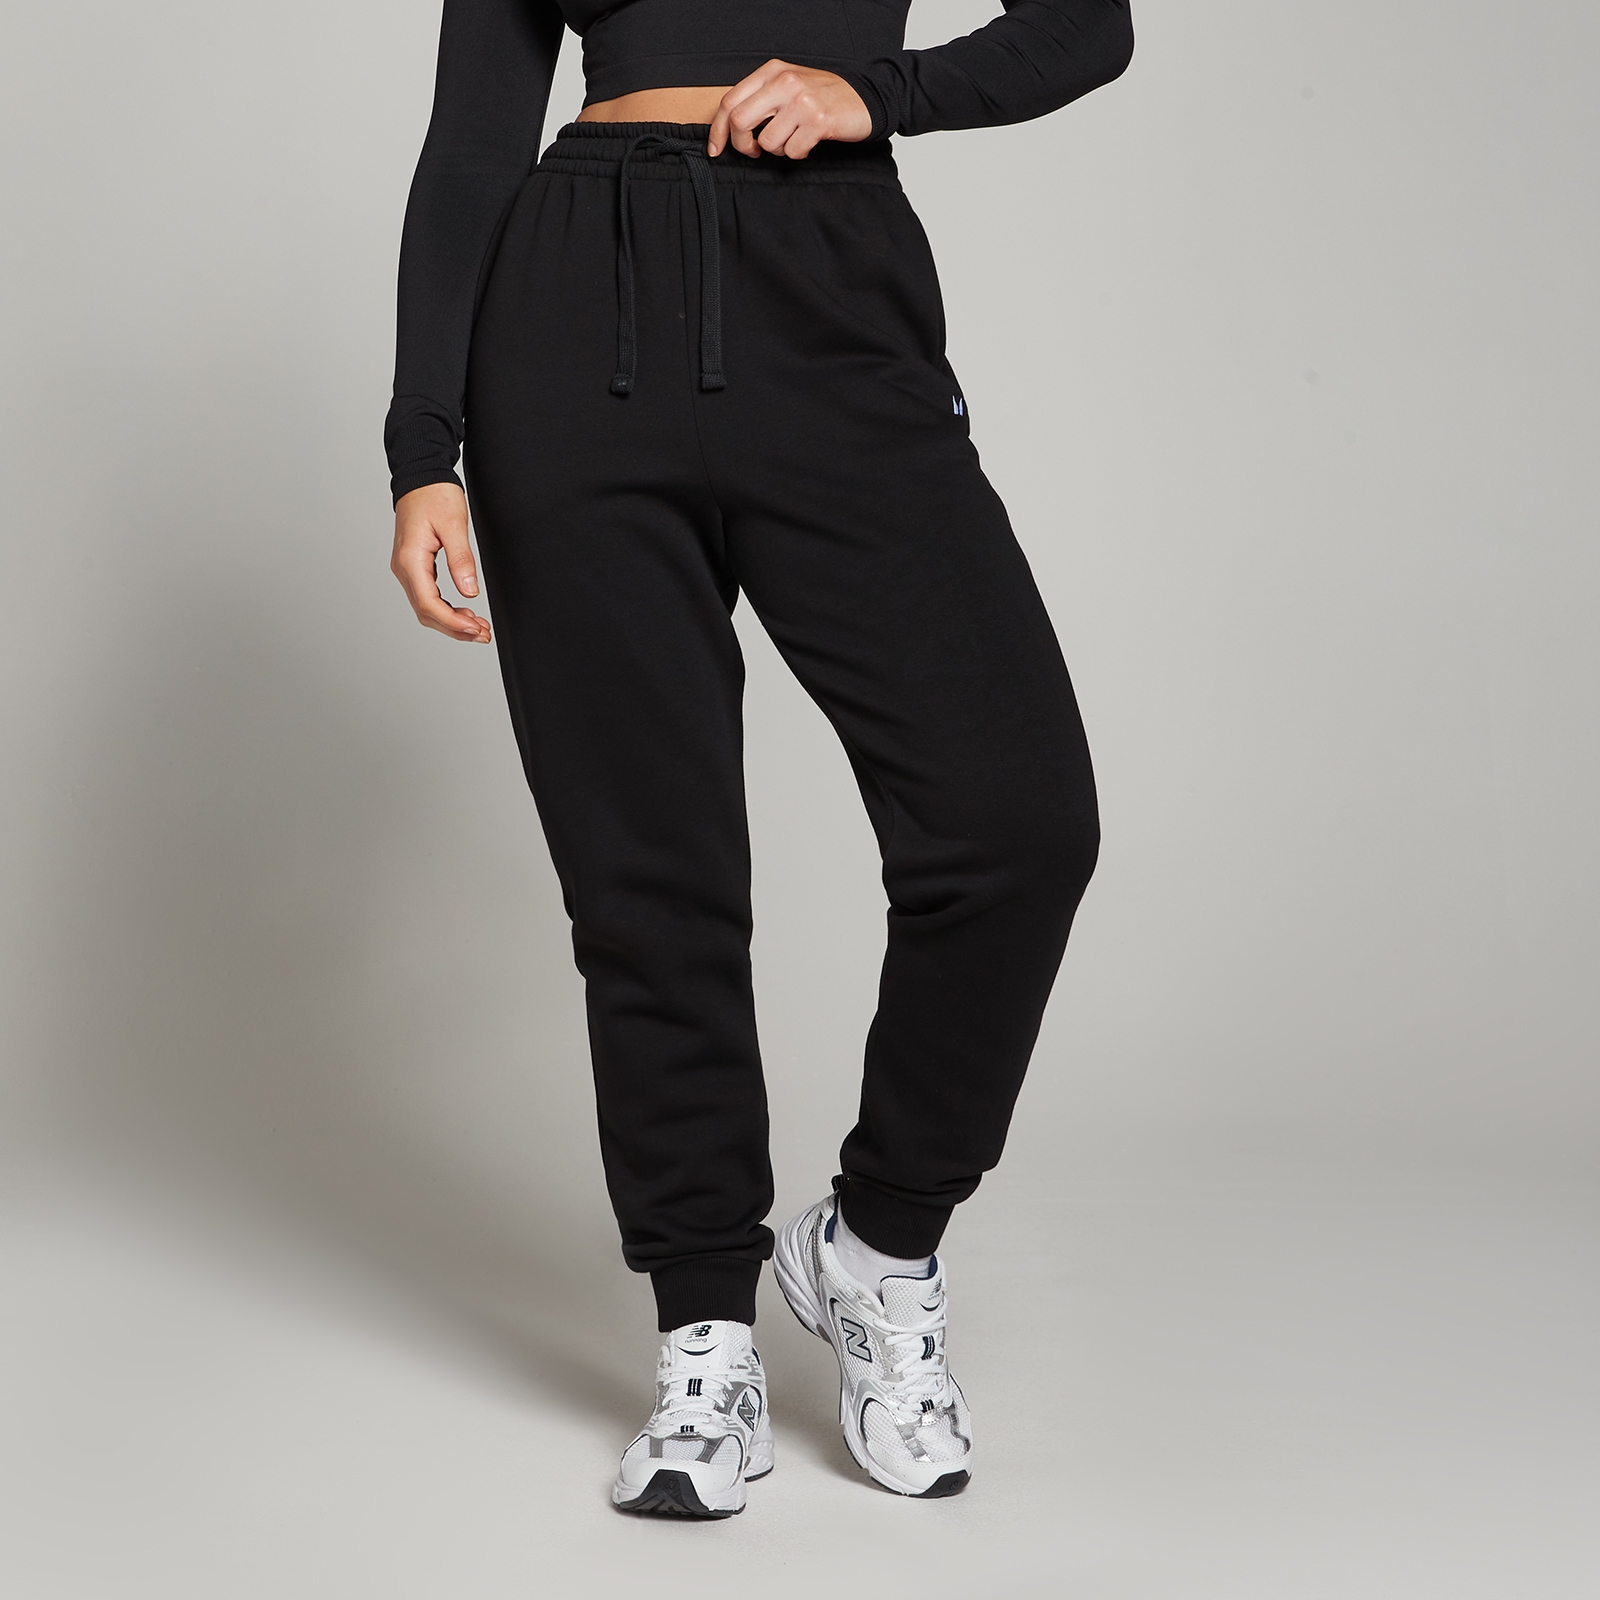 Image of Pantaloni da jogging vestibilità regolare MP Basics da donna - Neri - XS